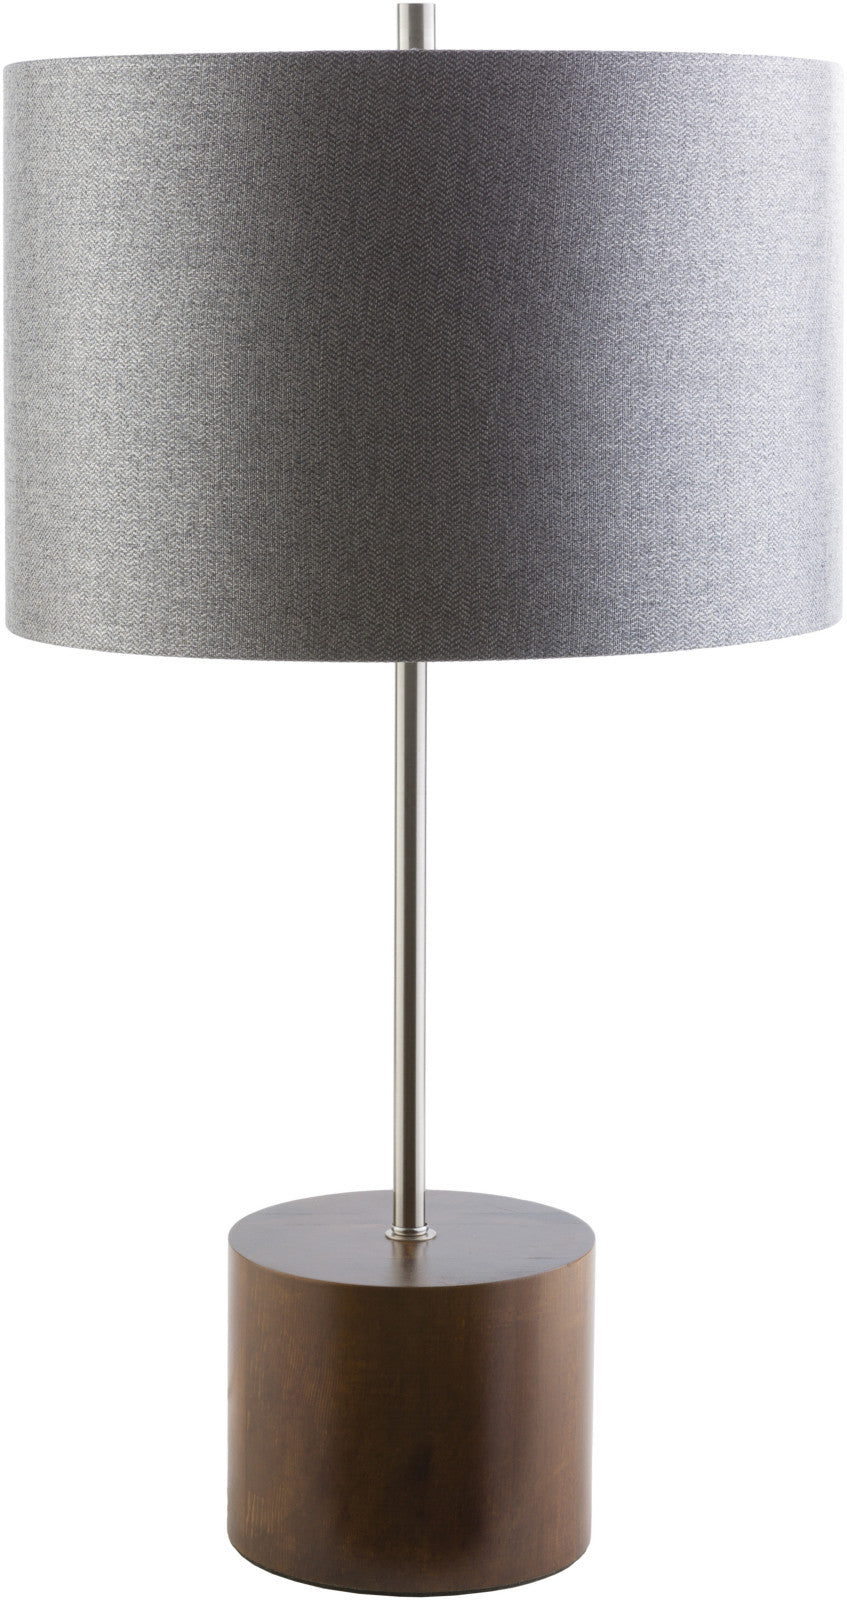 Surya Kingsley KGY-510 Gray Lamp Table Lamp